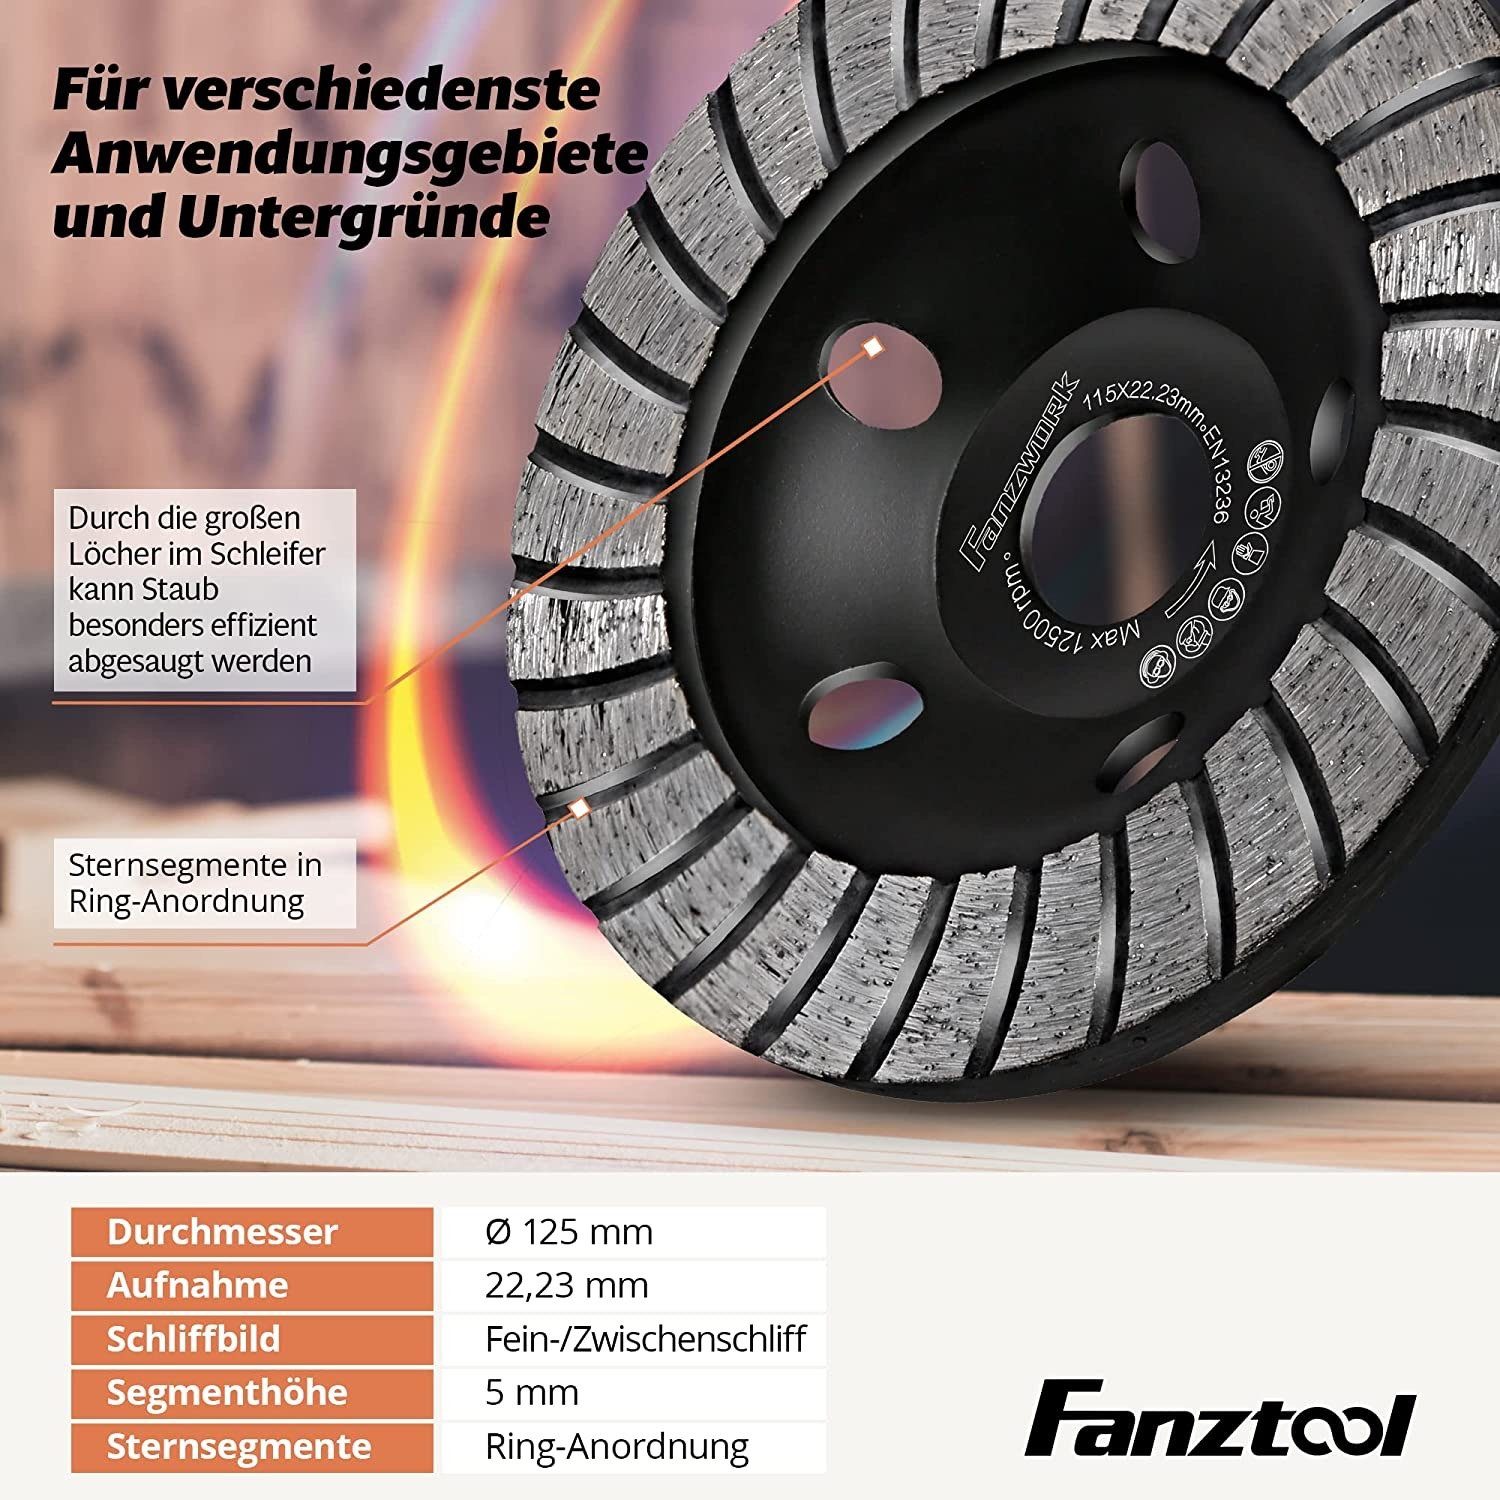 Diamant-Schleiftopf Premium Fanztool 115/125/180 FANZTOOL Schleifteller